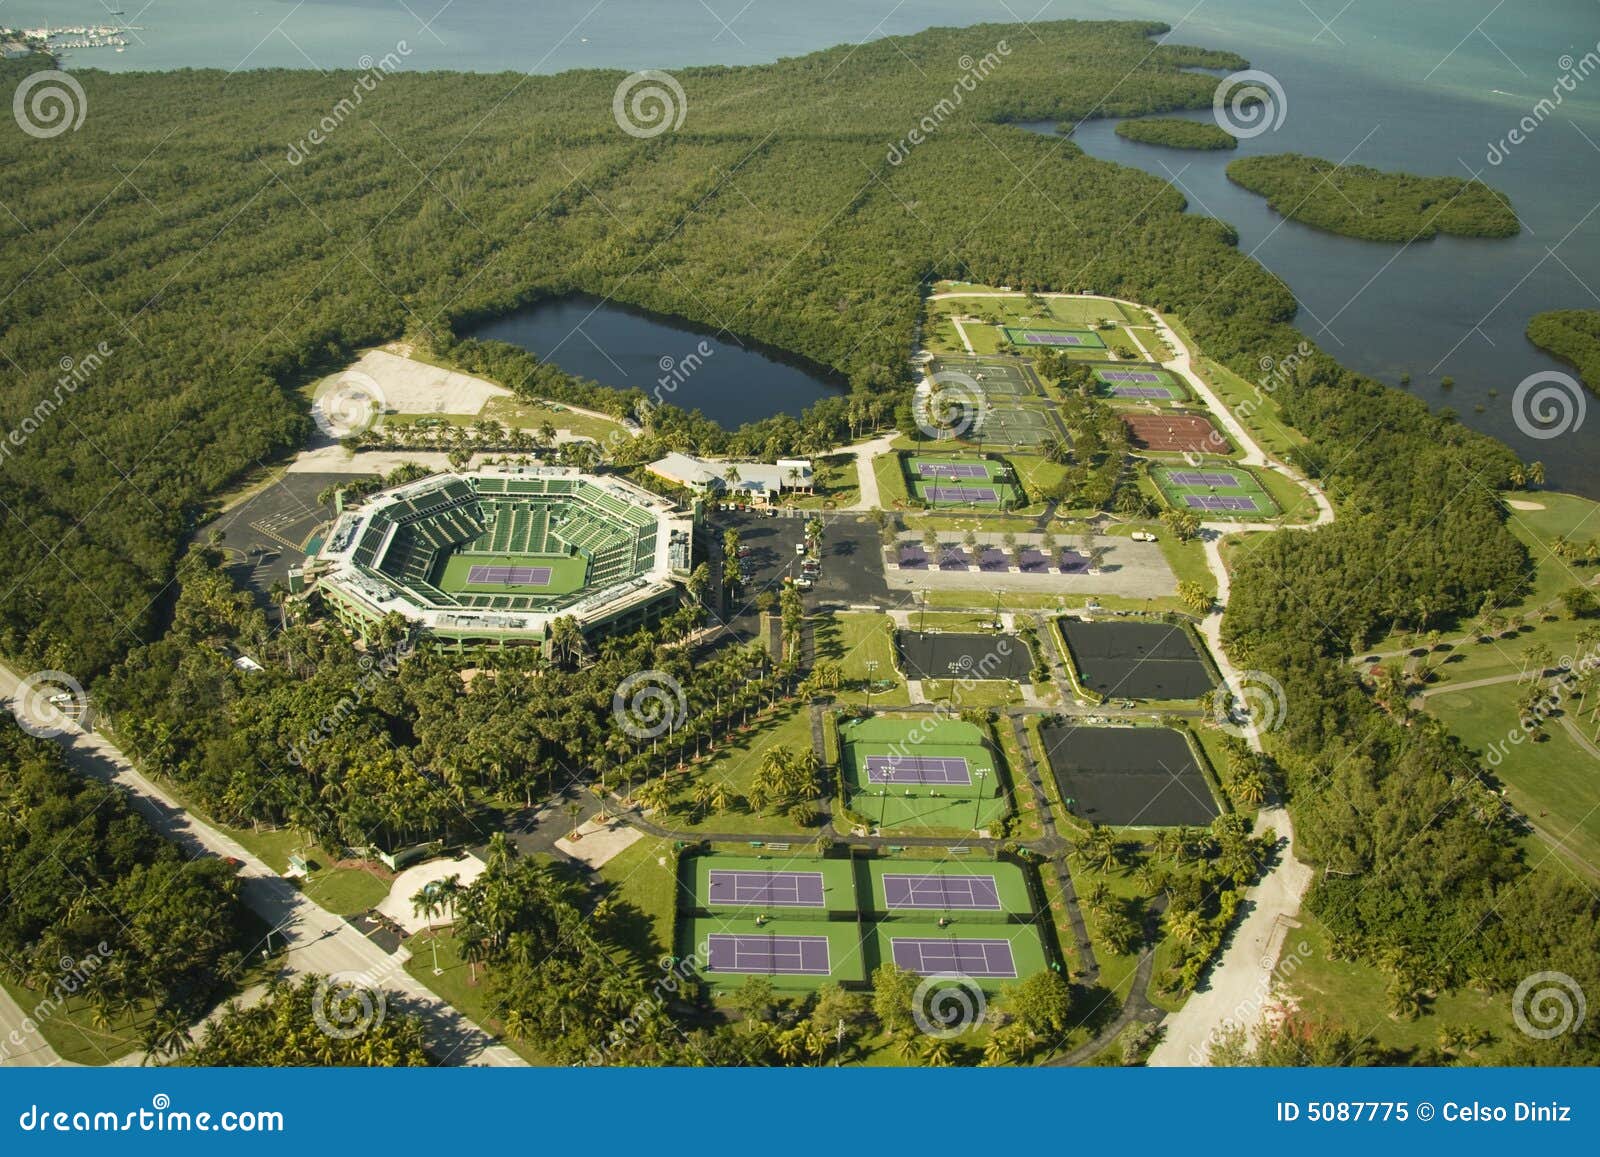 crandon-park-tennis-center-5087775.jpg